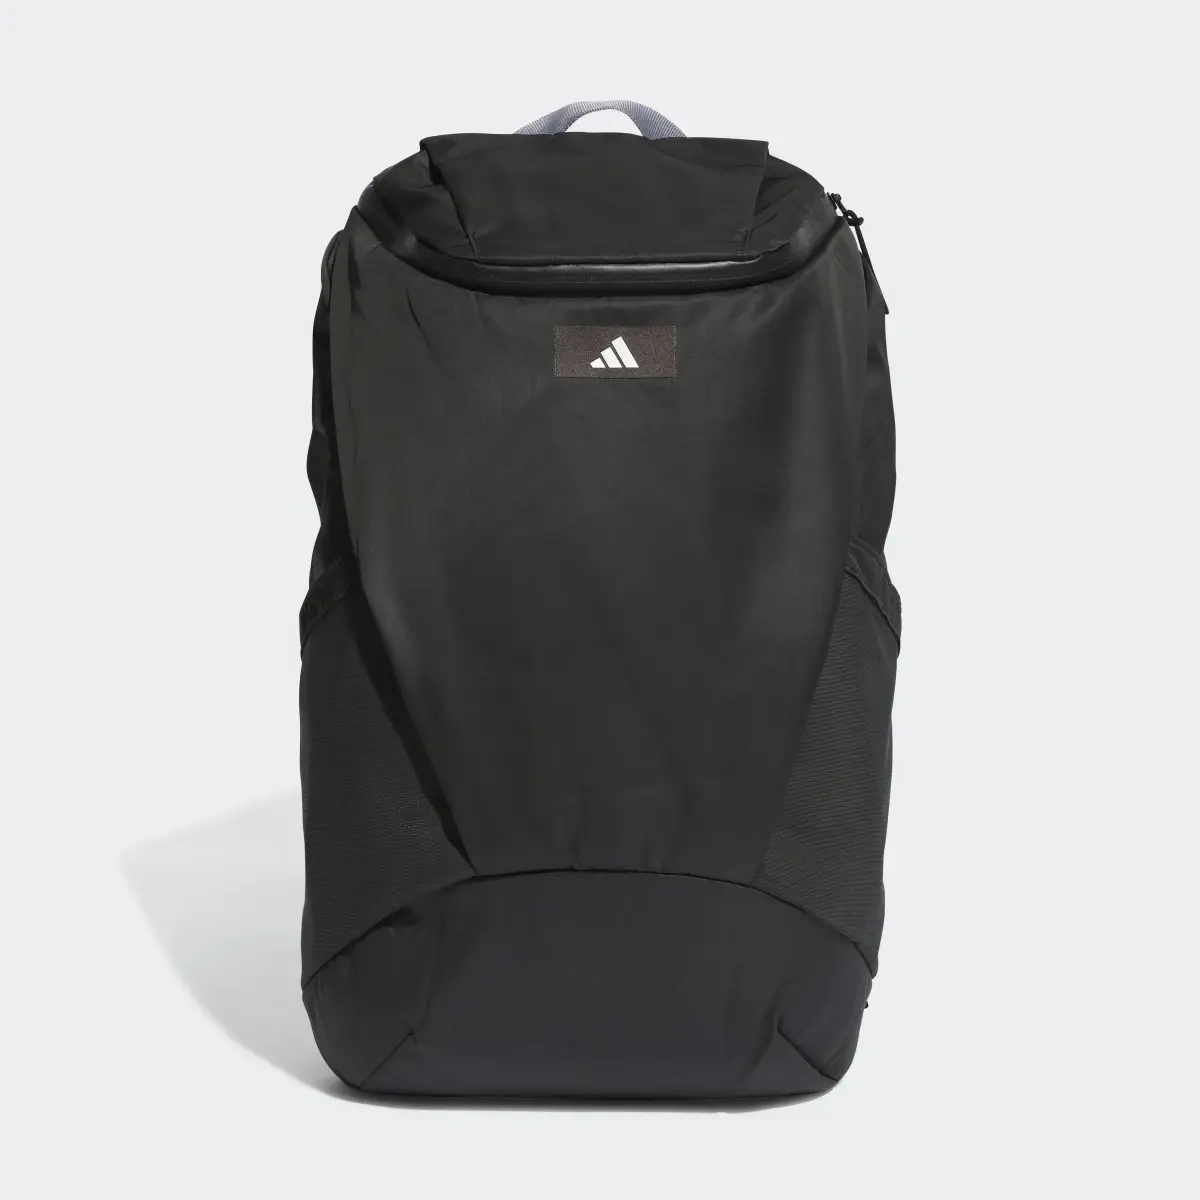 Adidas Designed for Training Gym Backpack. 2